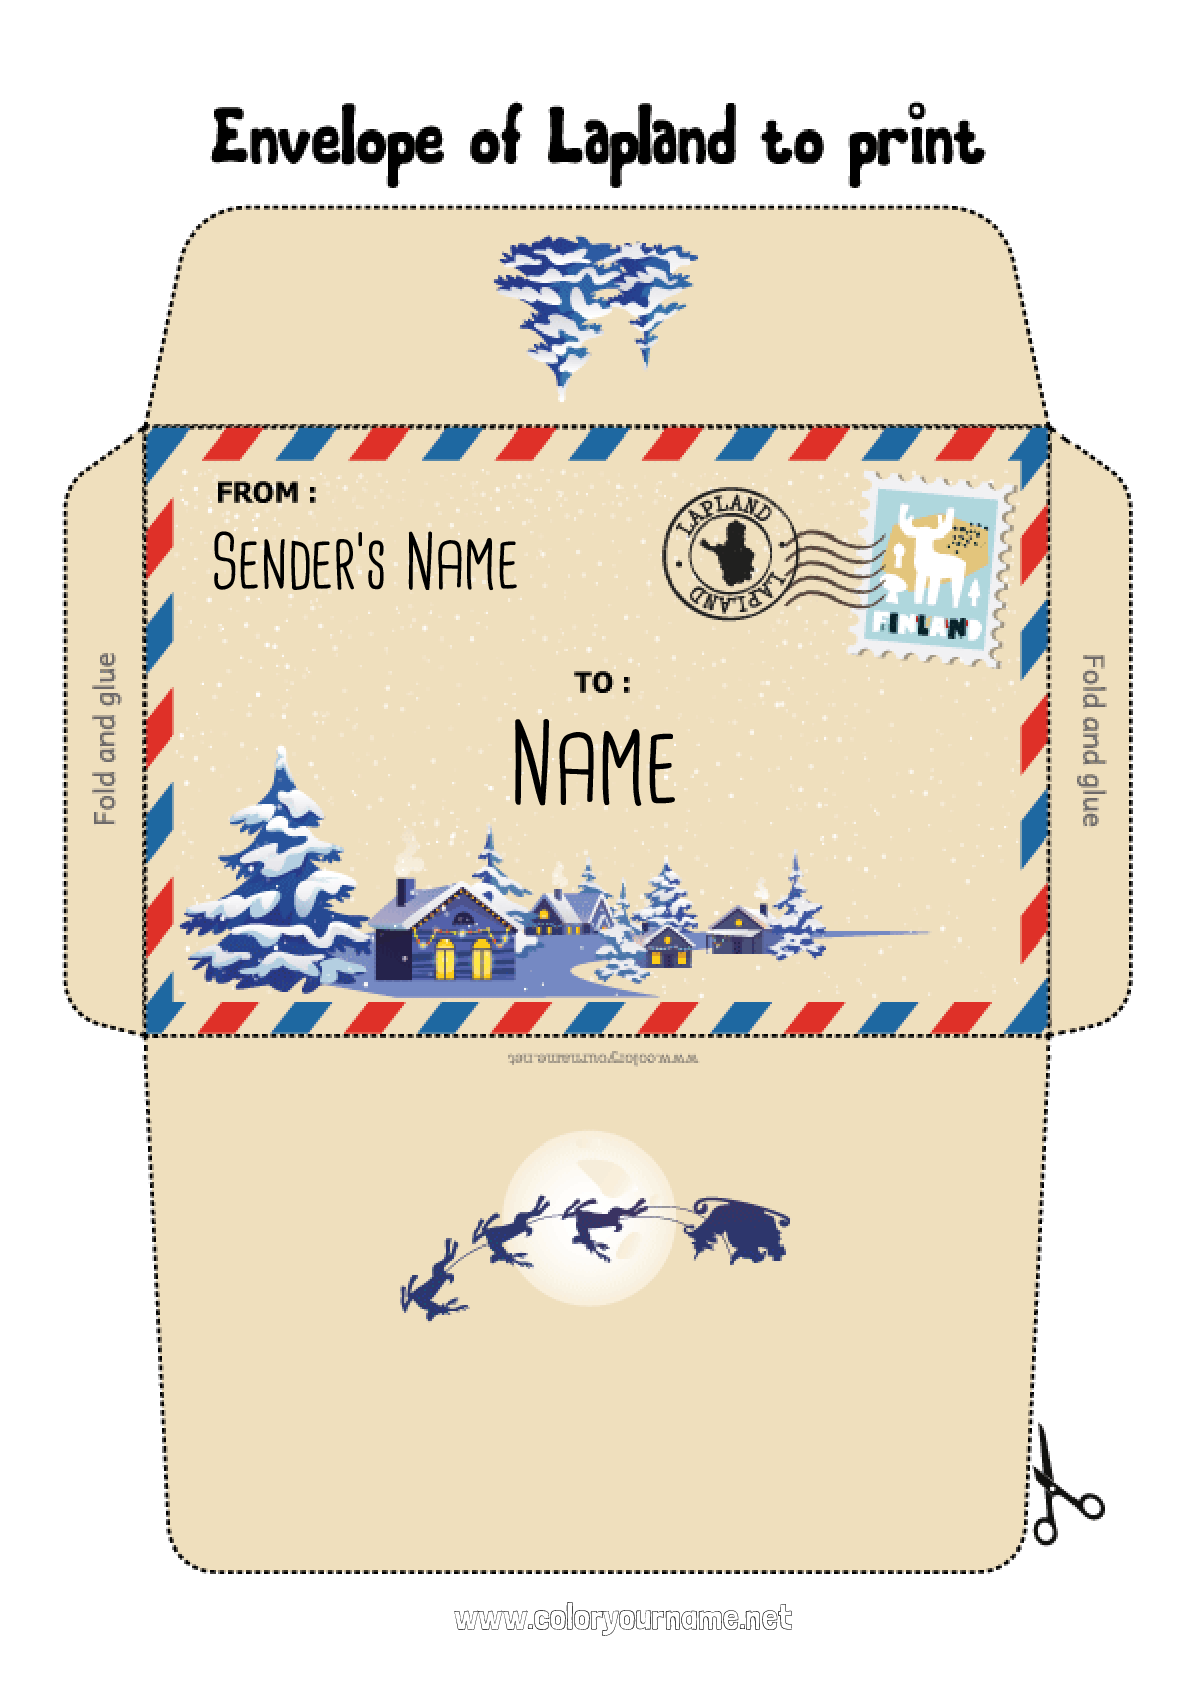 Coloring page No.3446 - Christmas Envelope Envelope to print